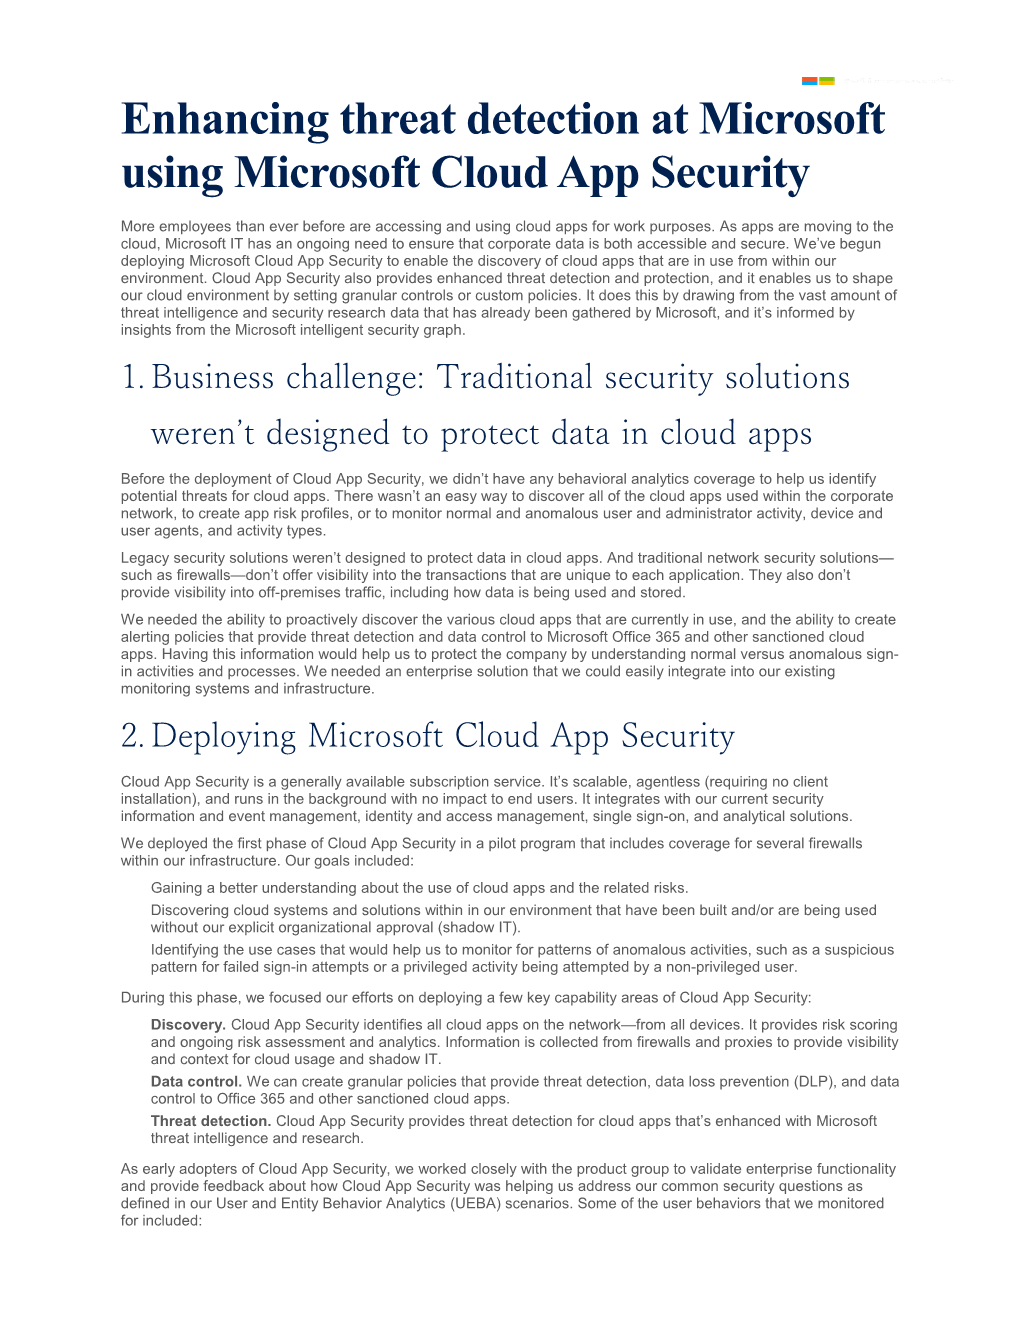 Enhancing Threat Detection at Microsoft Using Microsoft Cloud App Security